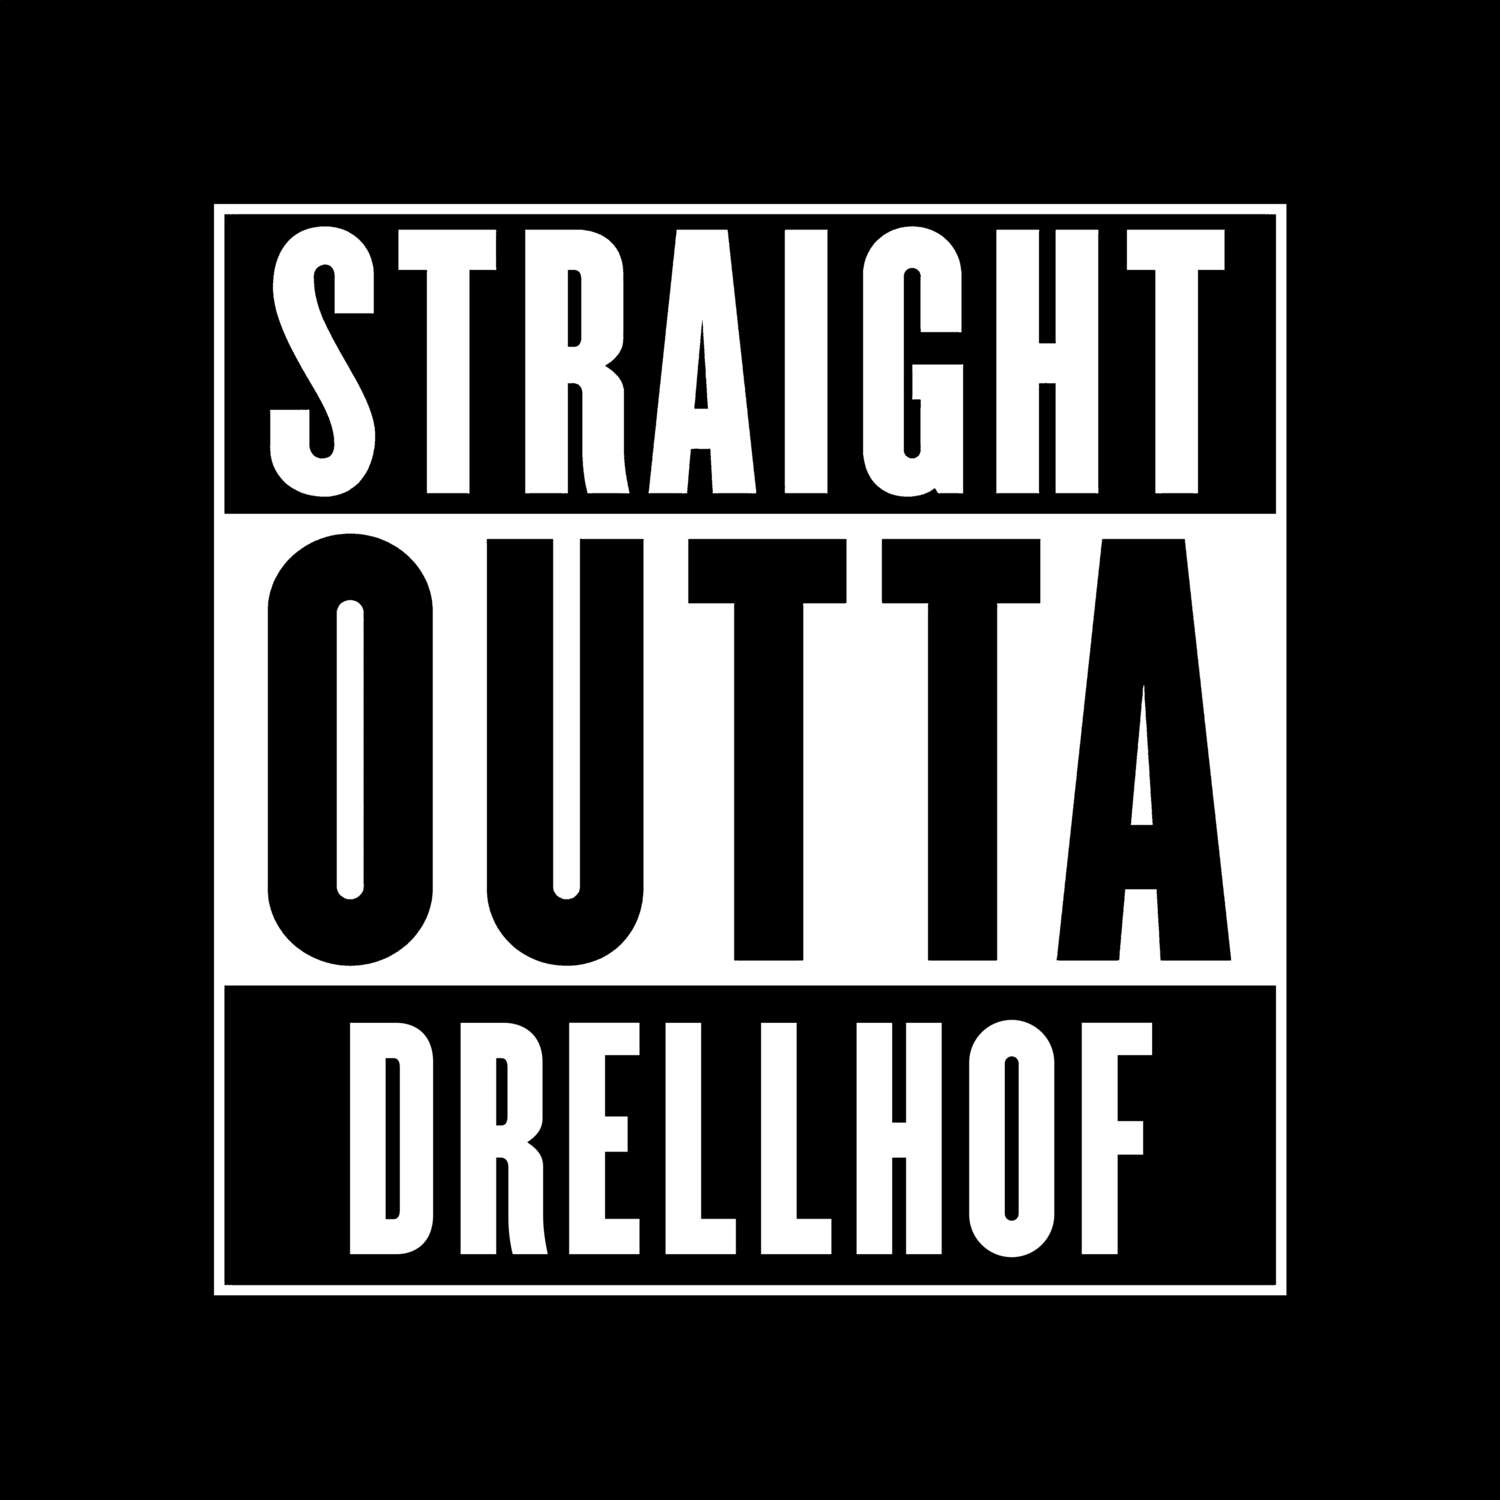 Drellhof T-Shirt »Straight Outta«